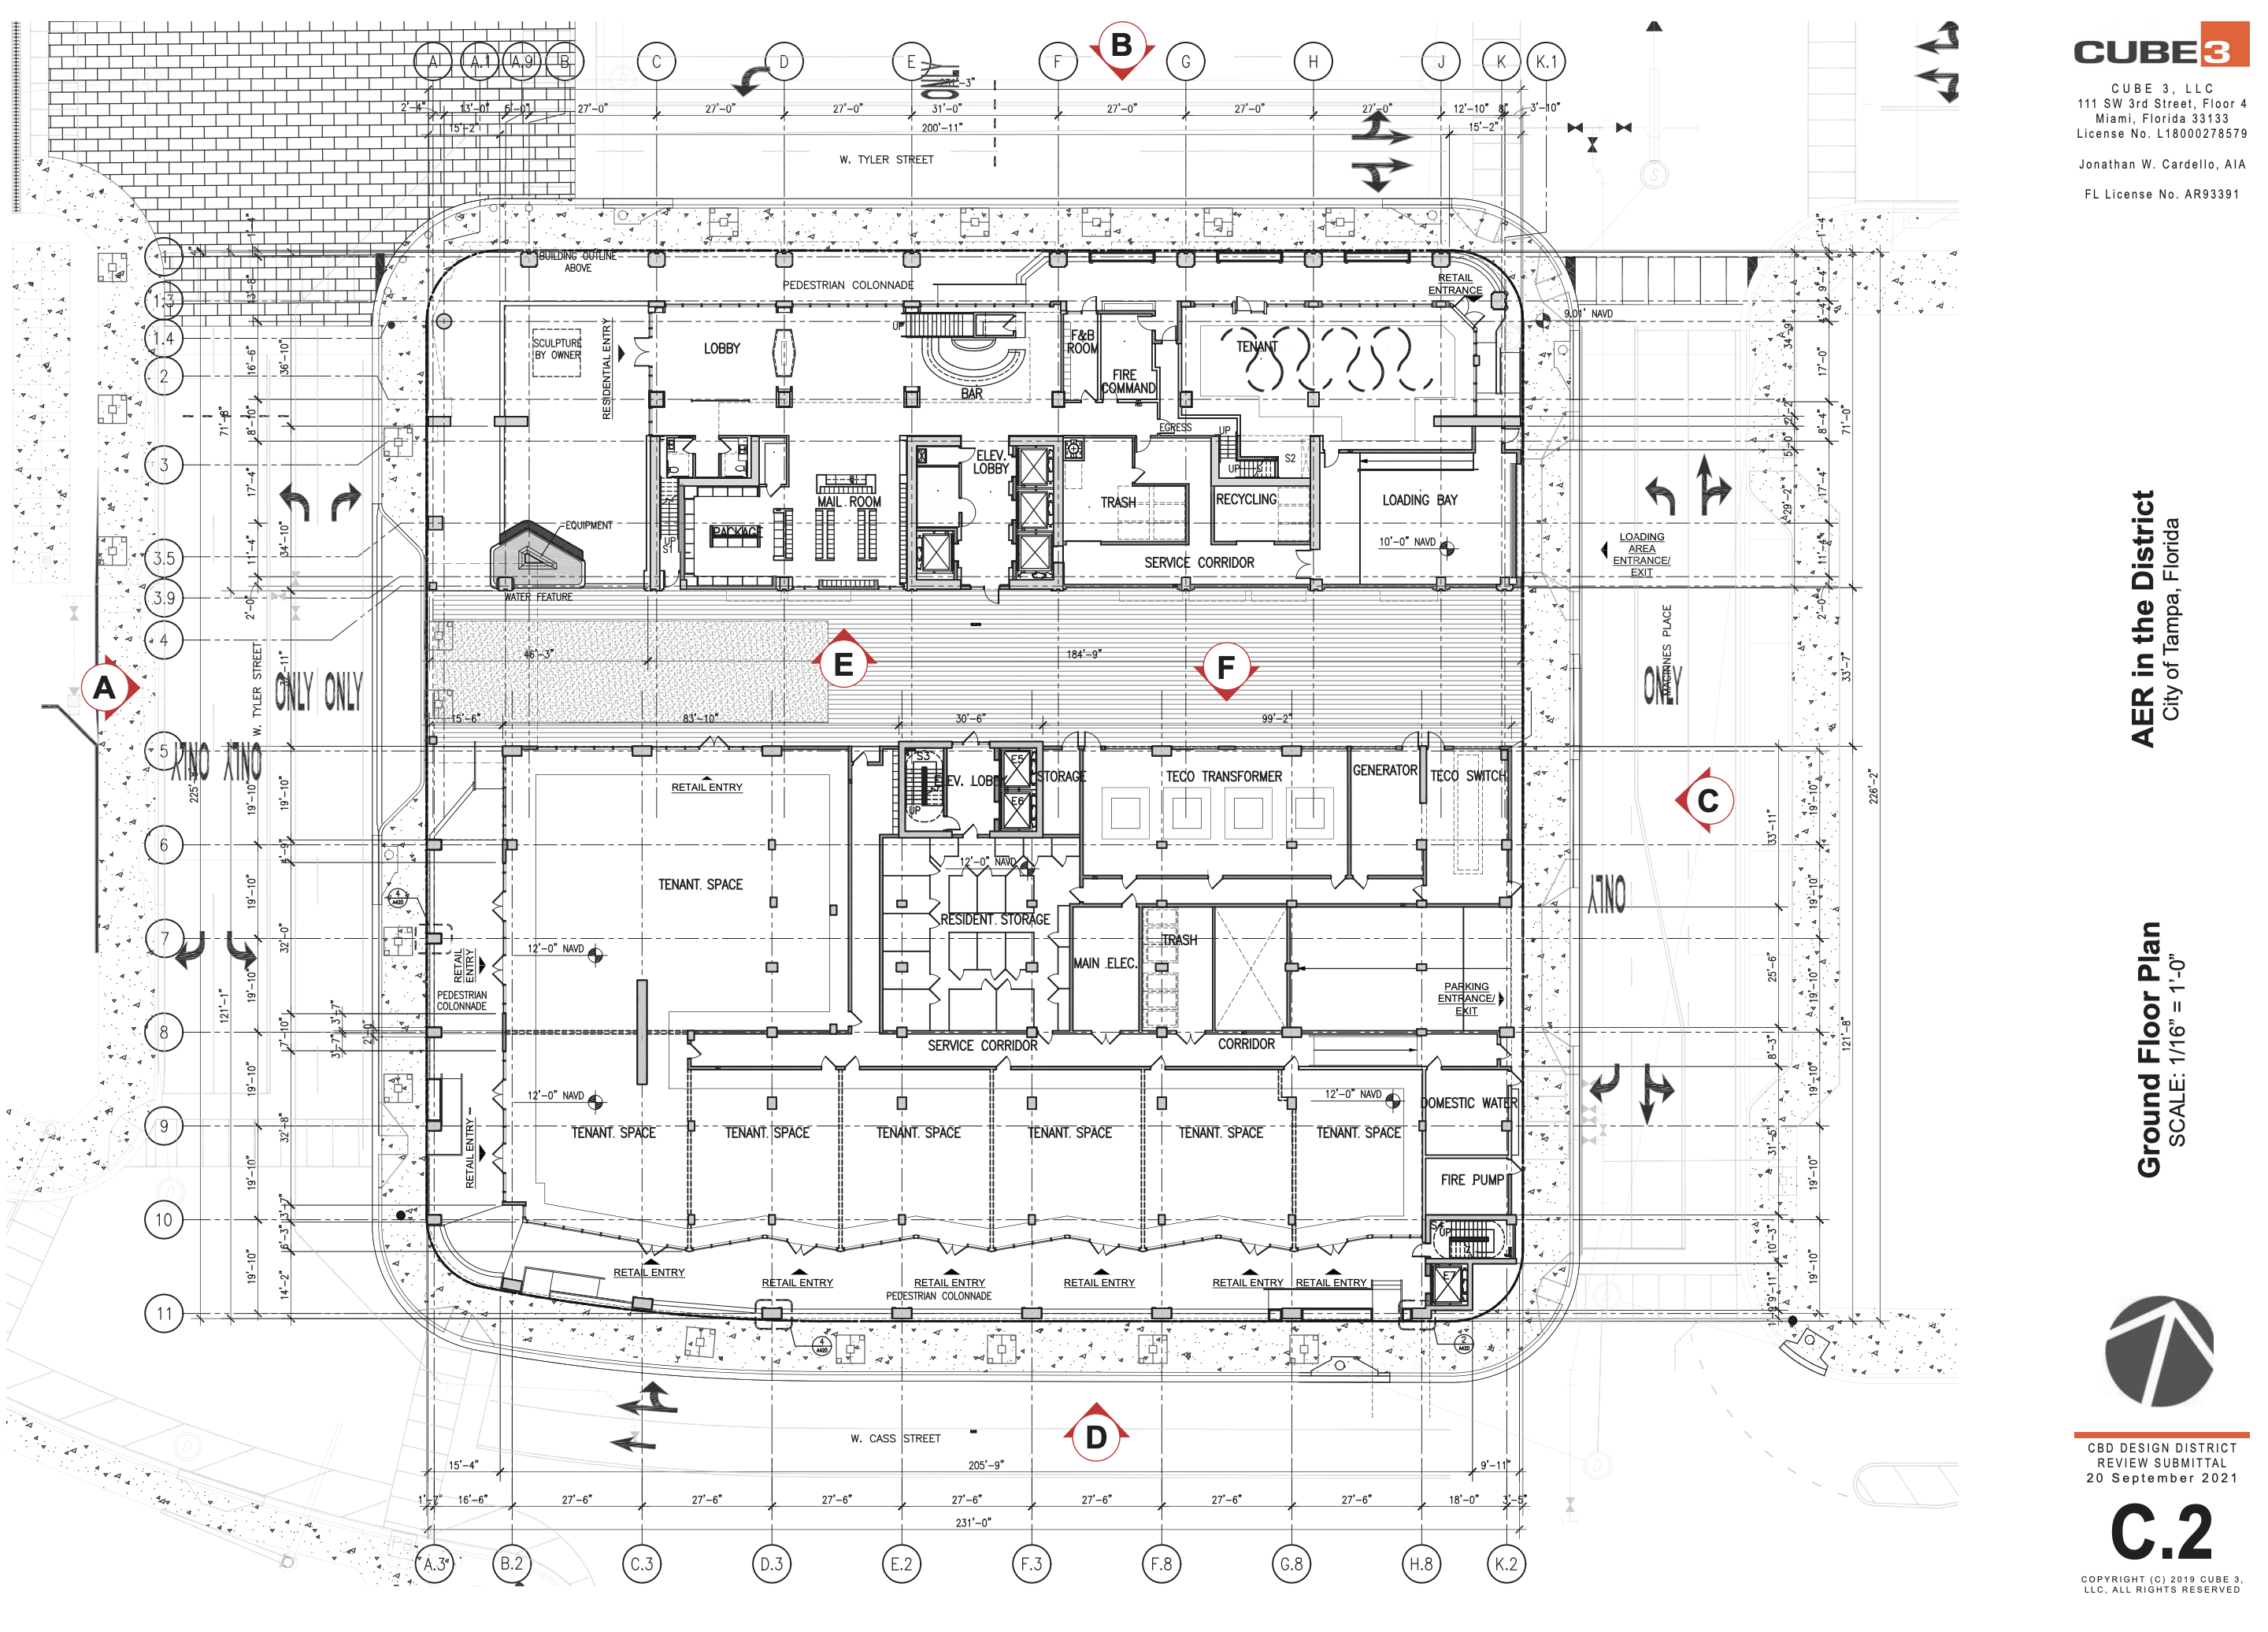 Ground Floor Plan. Courtesy of Cube 3.